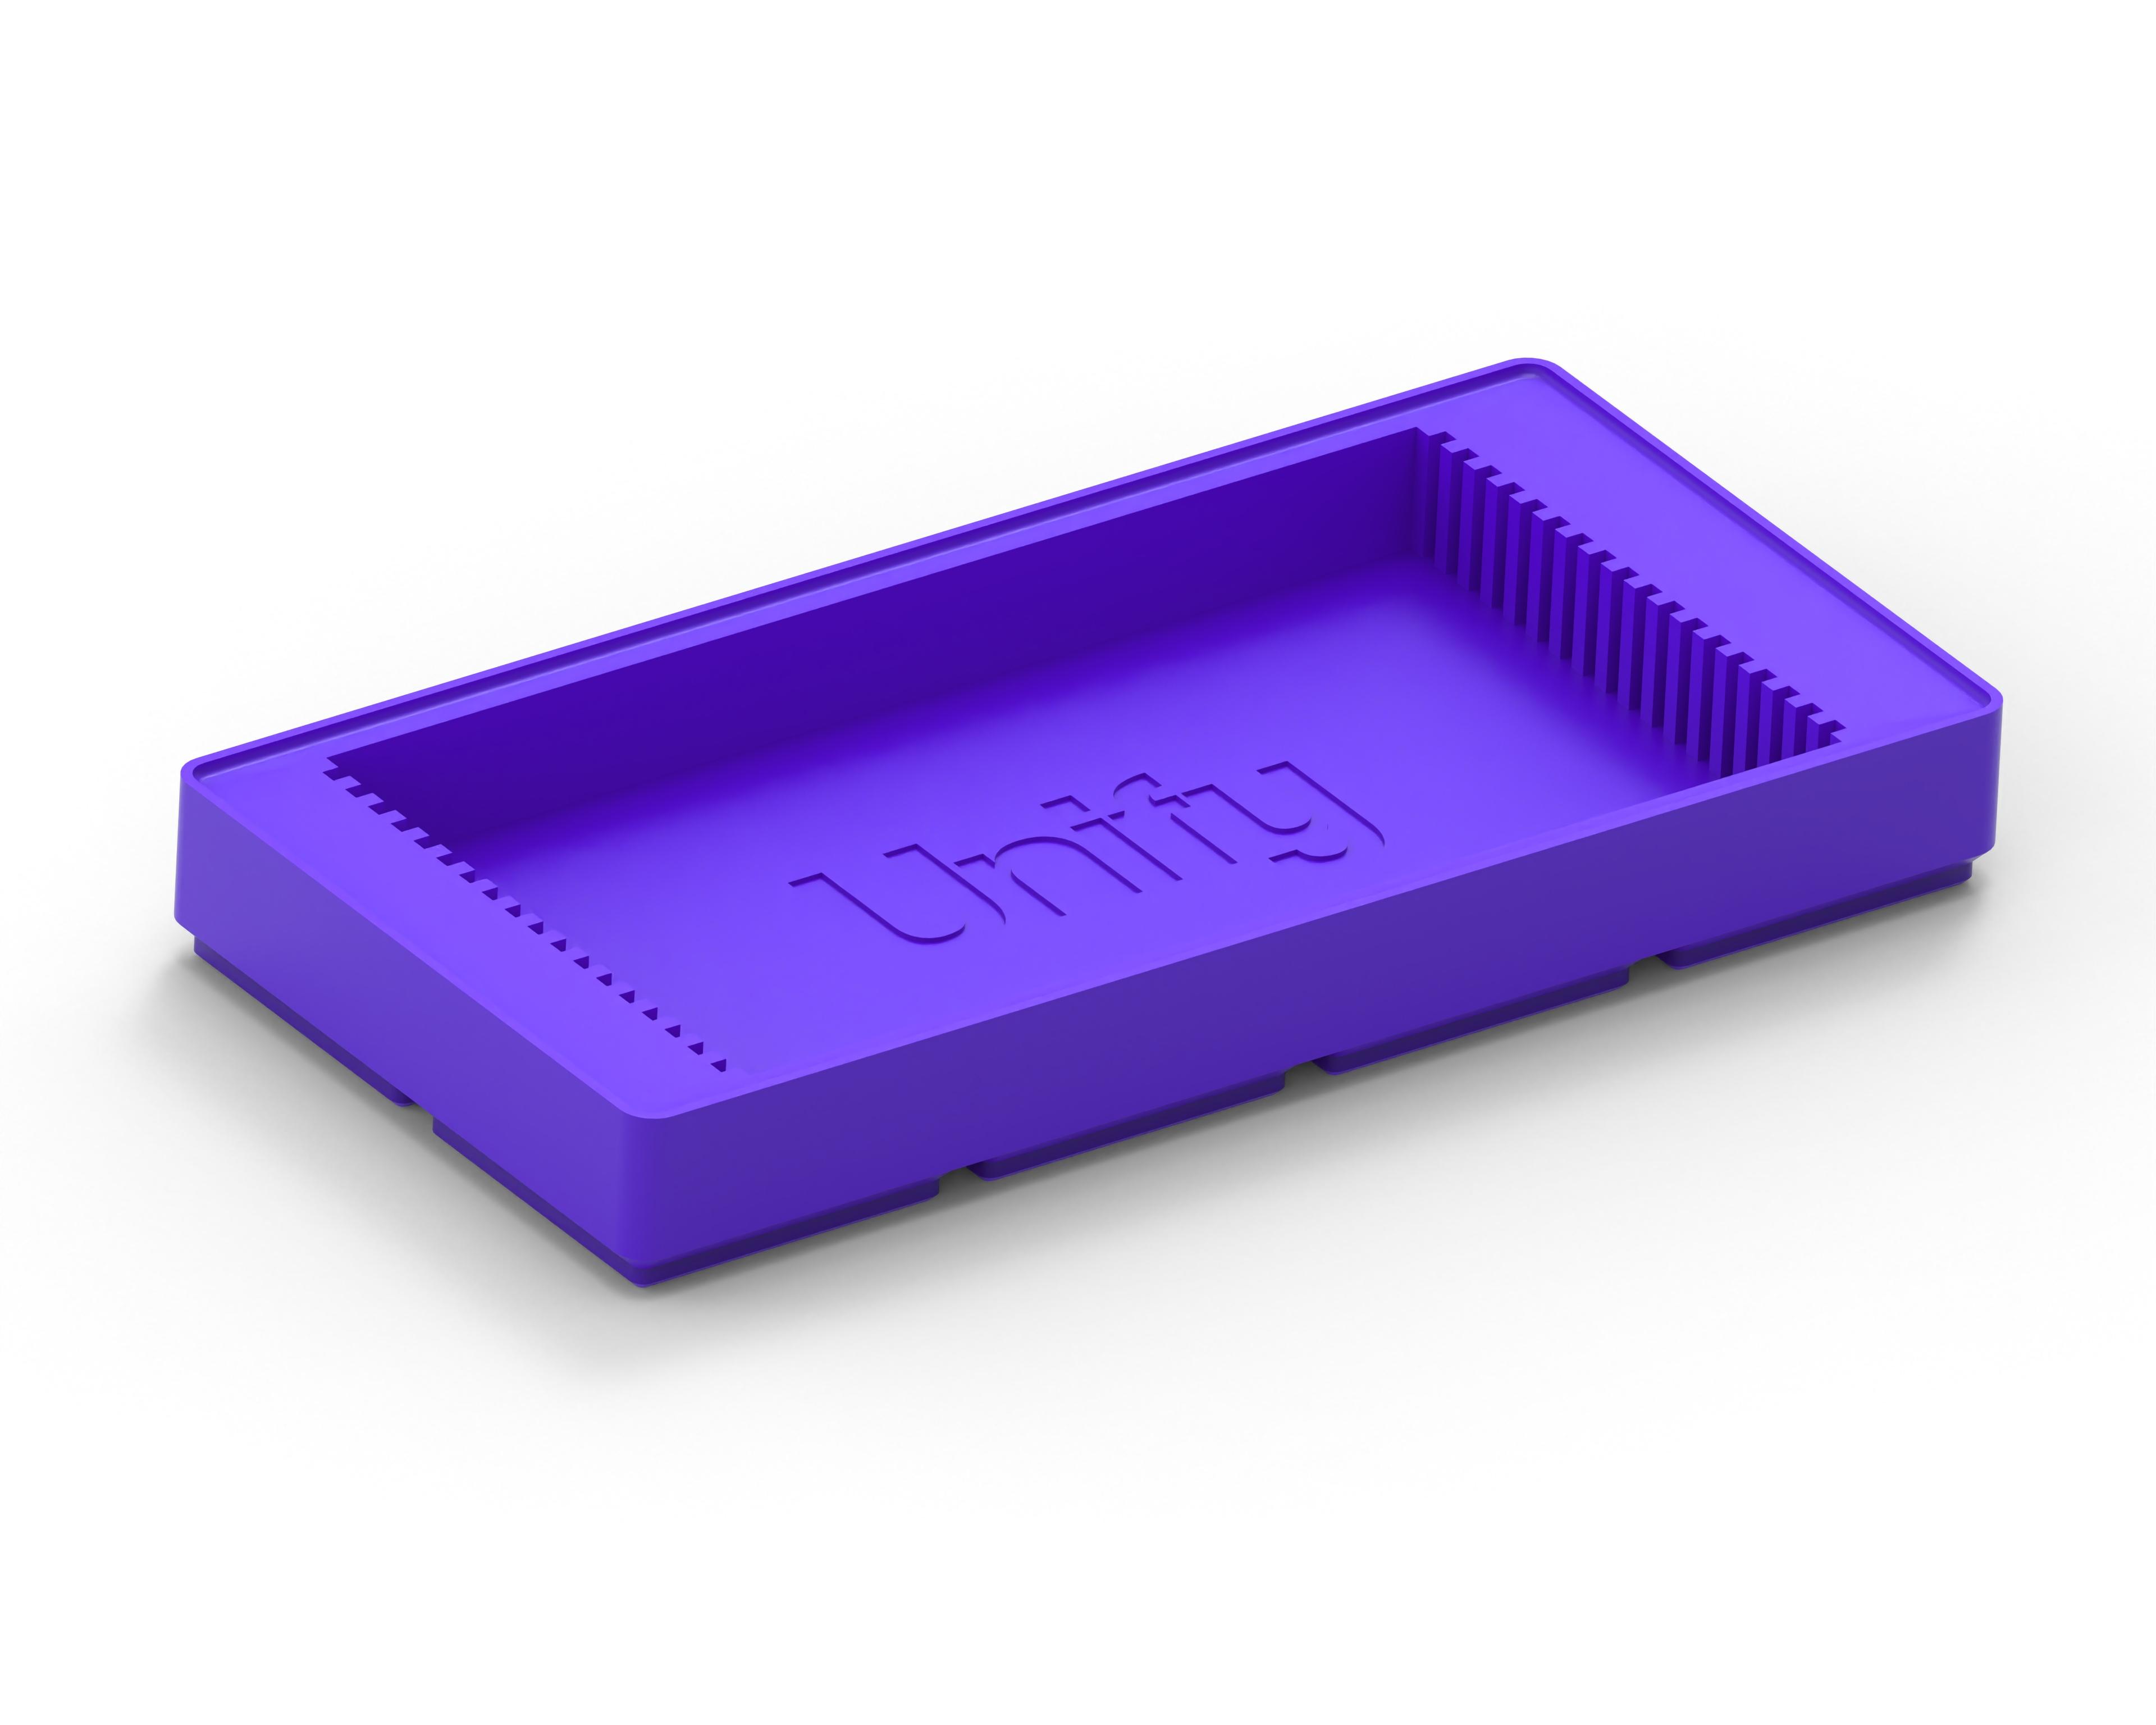 Gridfinity RAM DIMM Tray 3d model